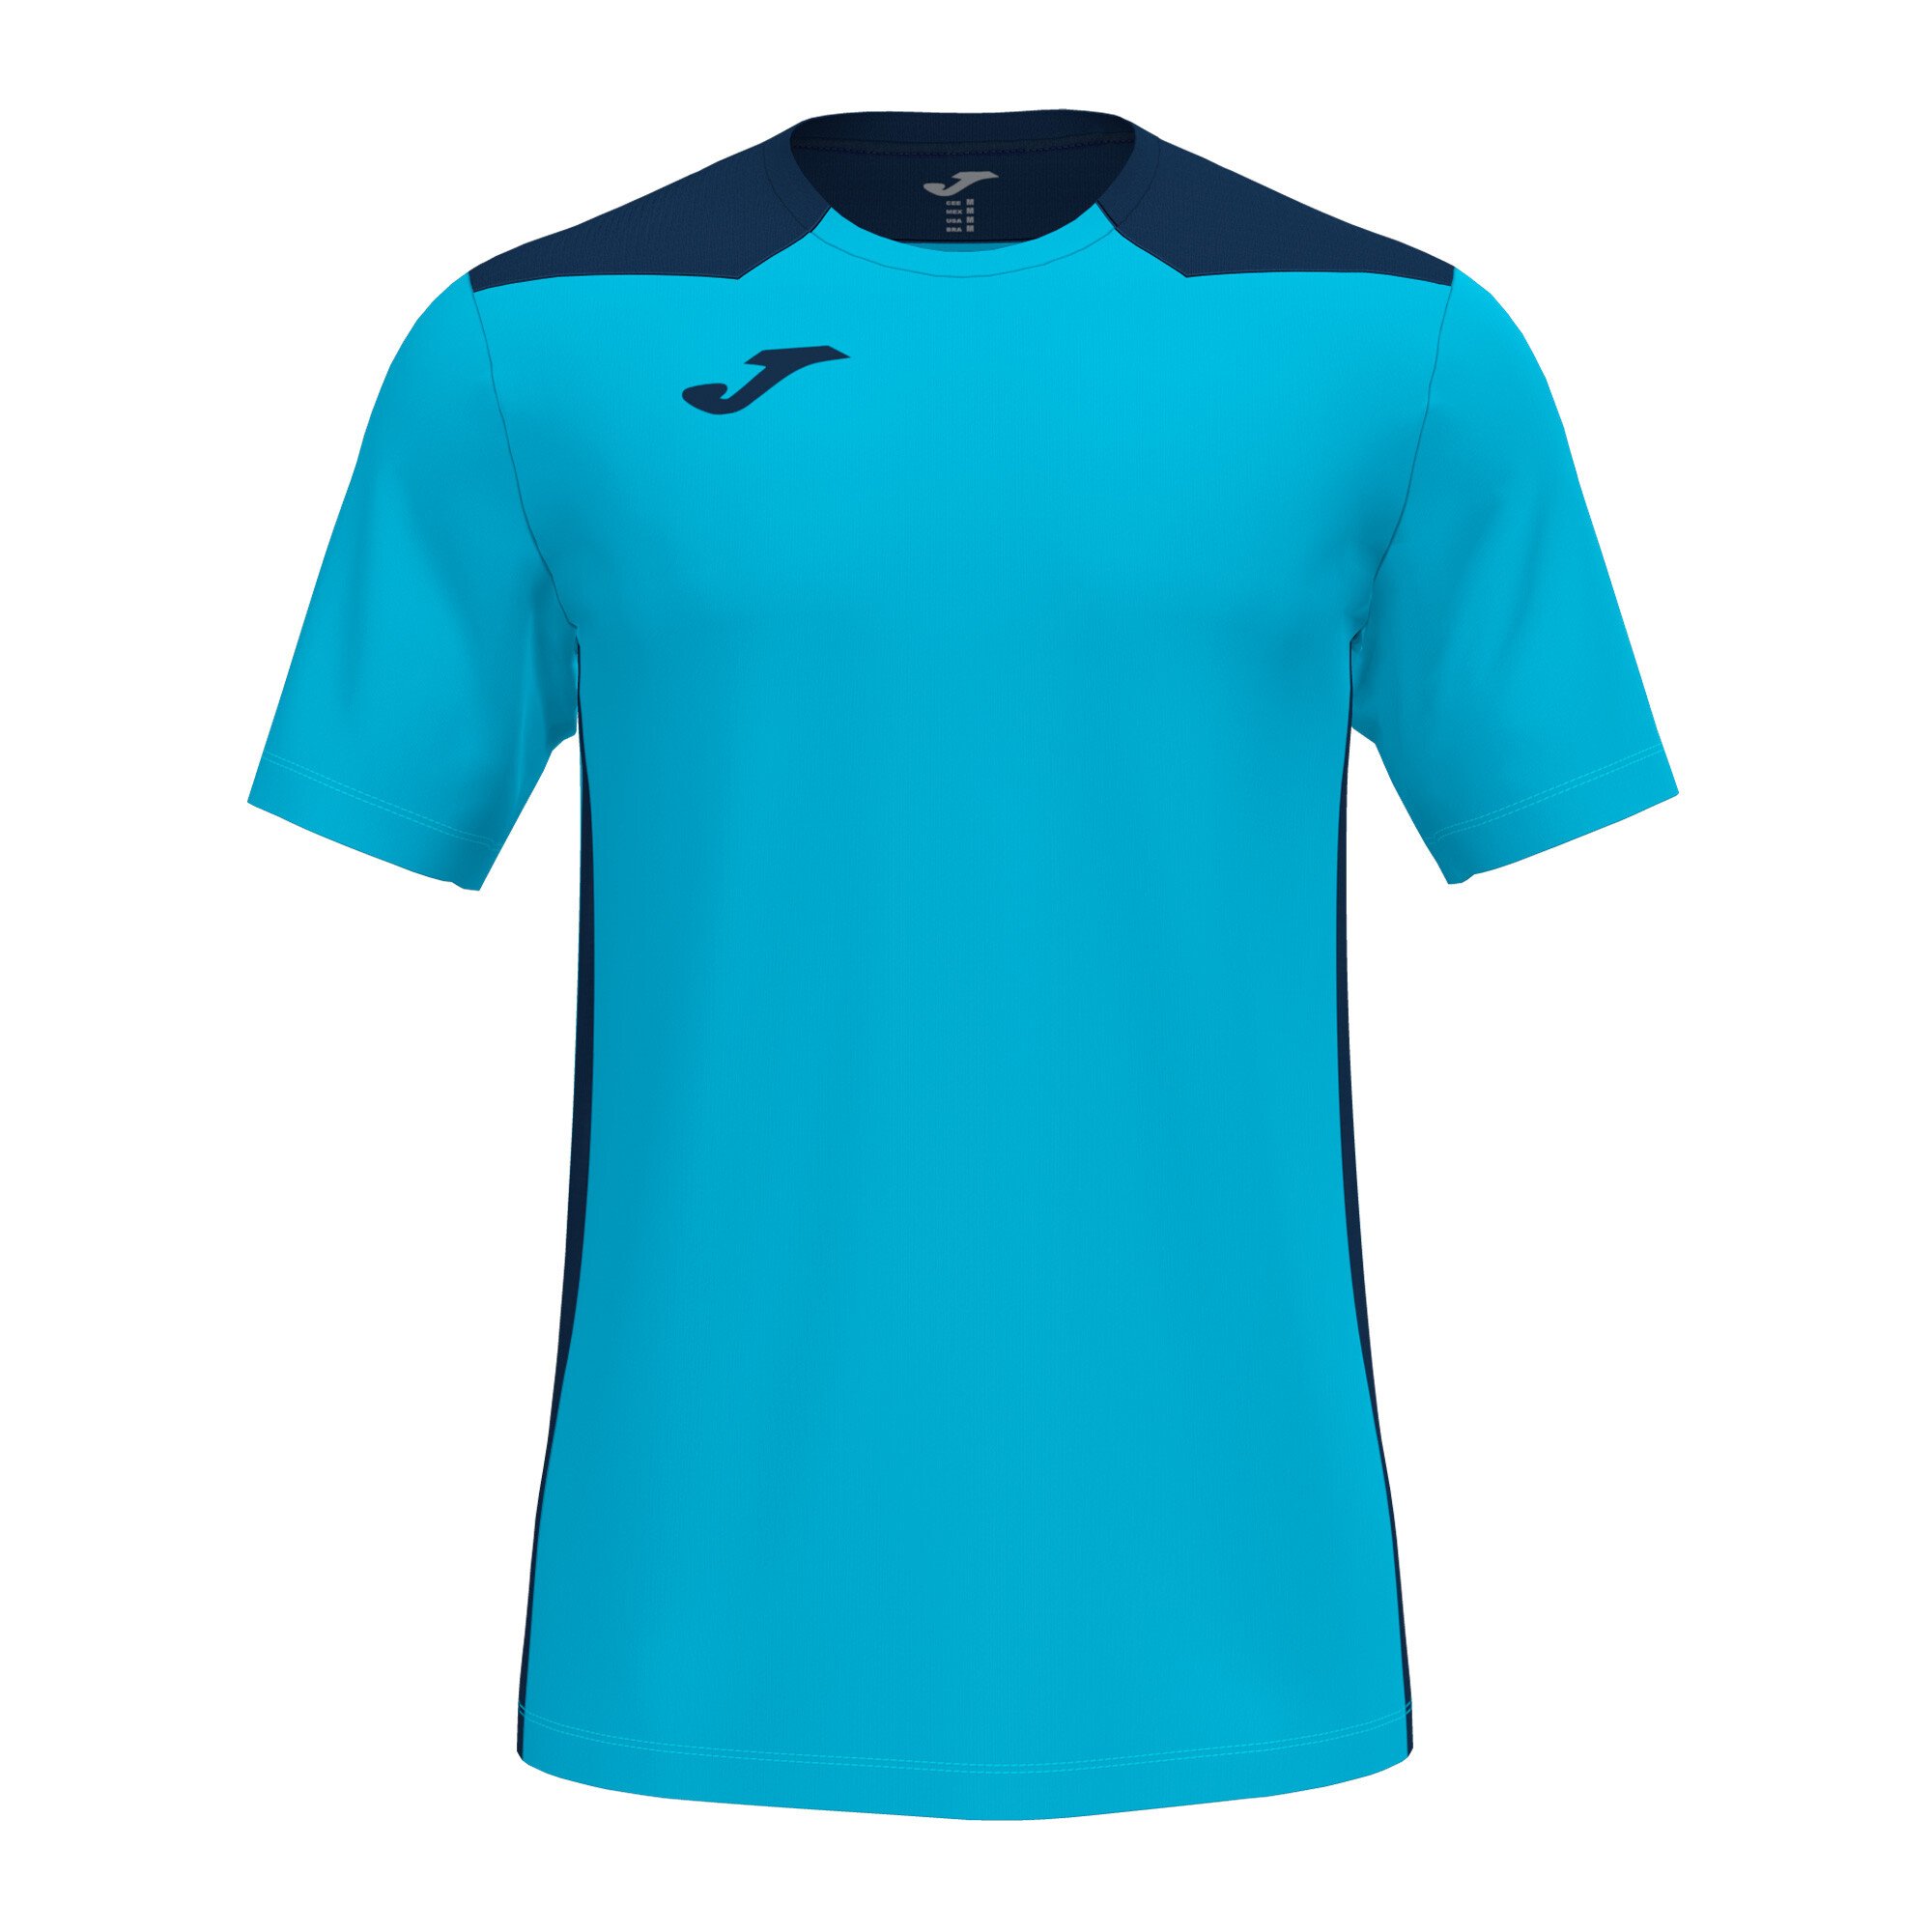 Joma Championship VI Shirt - Turquoise Fluor / Dark Navy - Total 